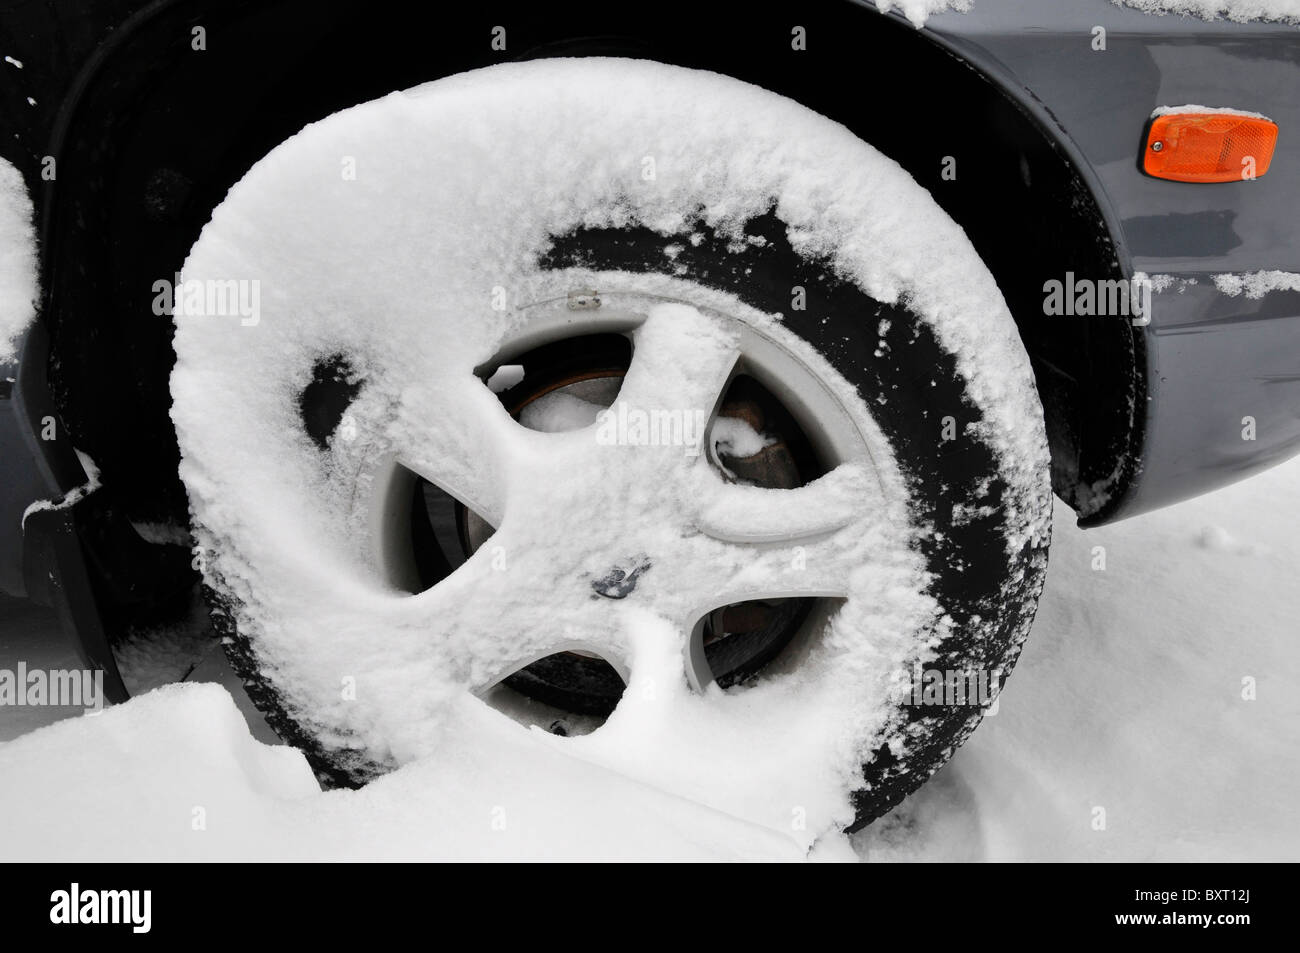 Car wheel in snow, Philadelphia, PA, USA Stock Photo